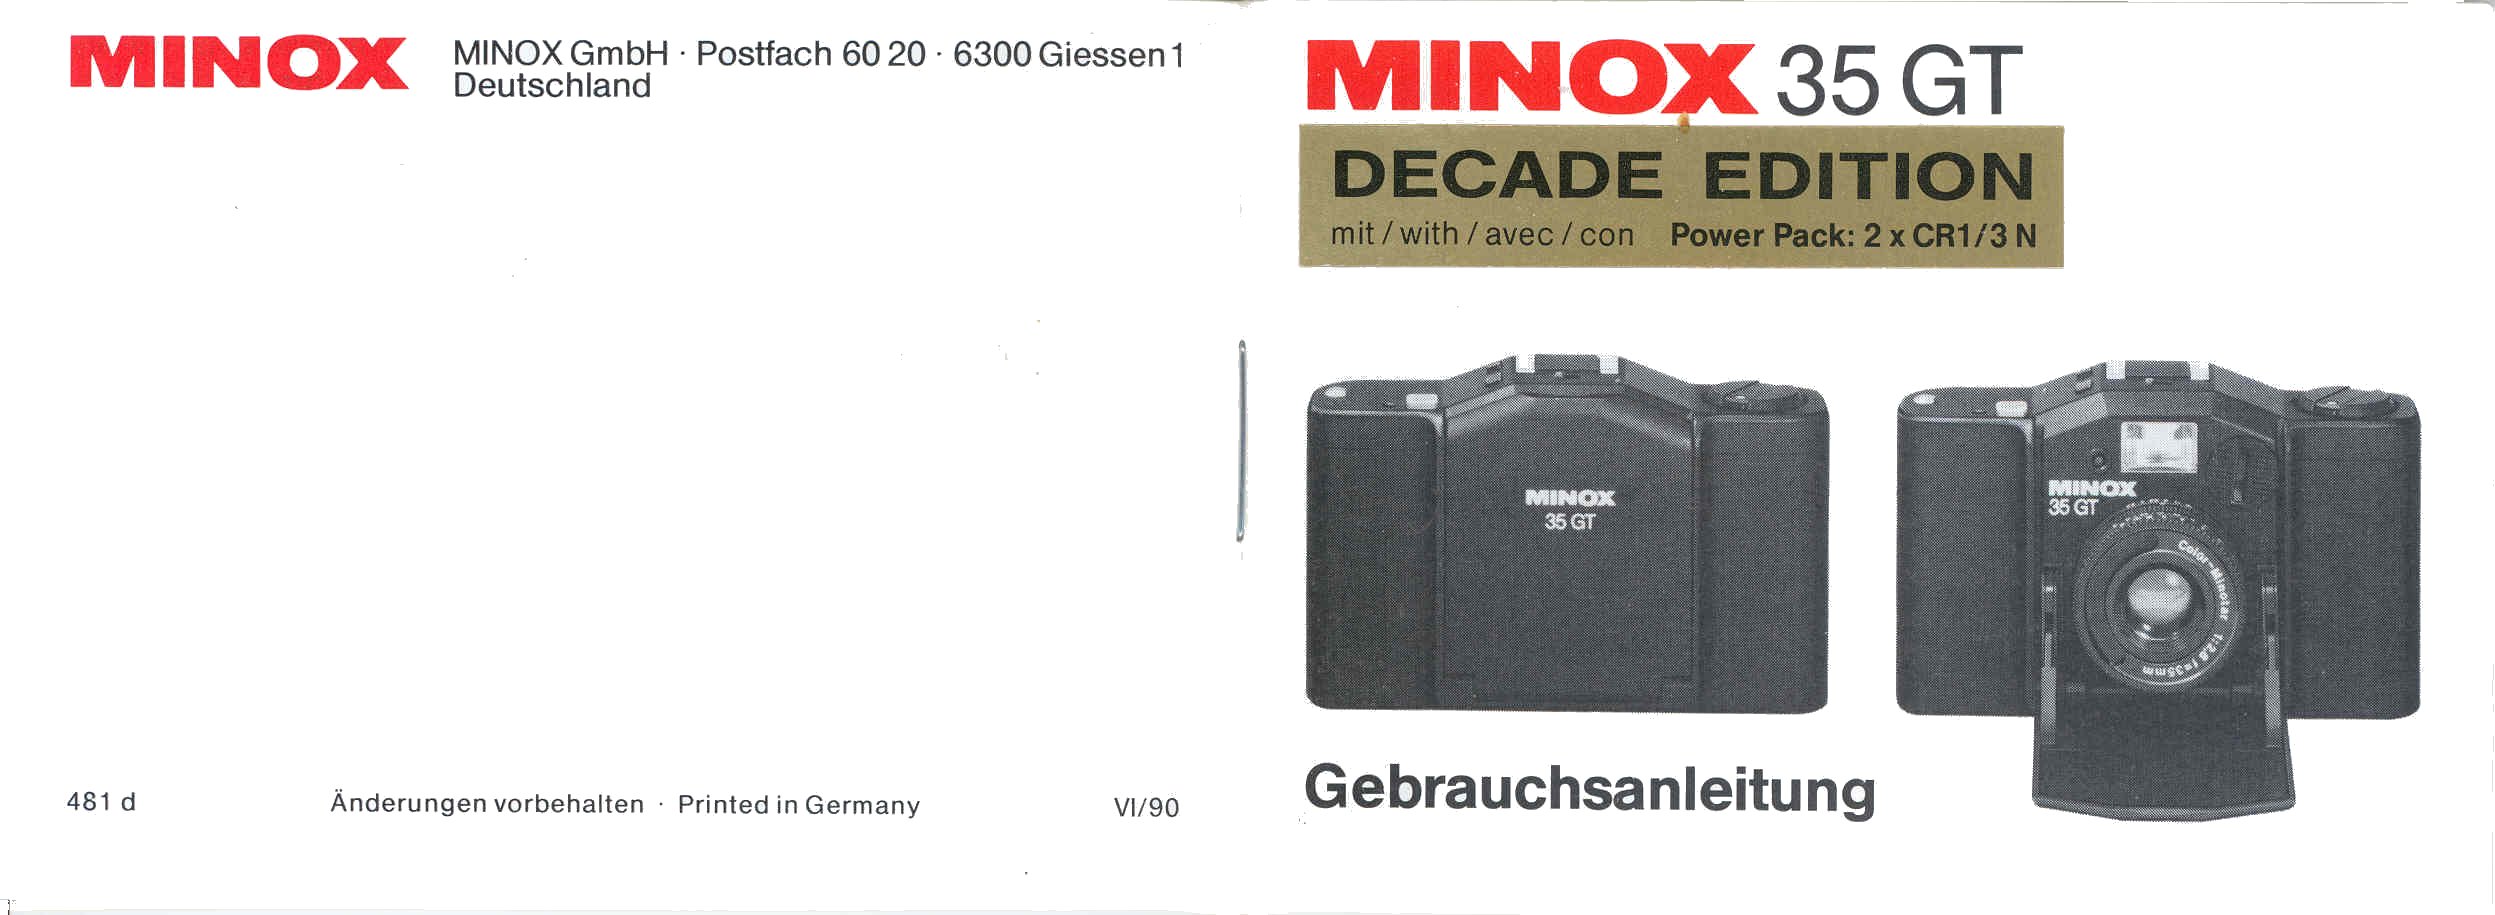 Minox 35 GT manual